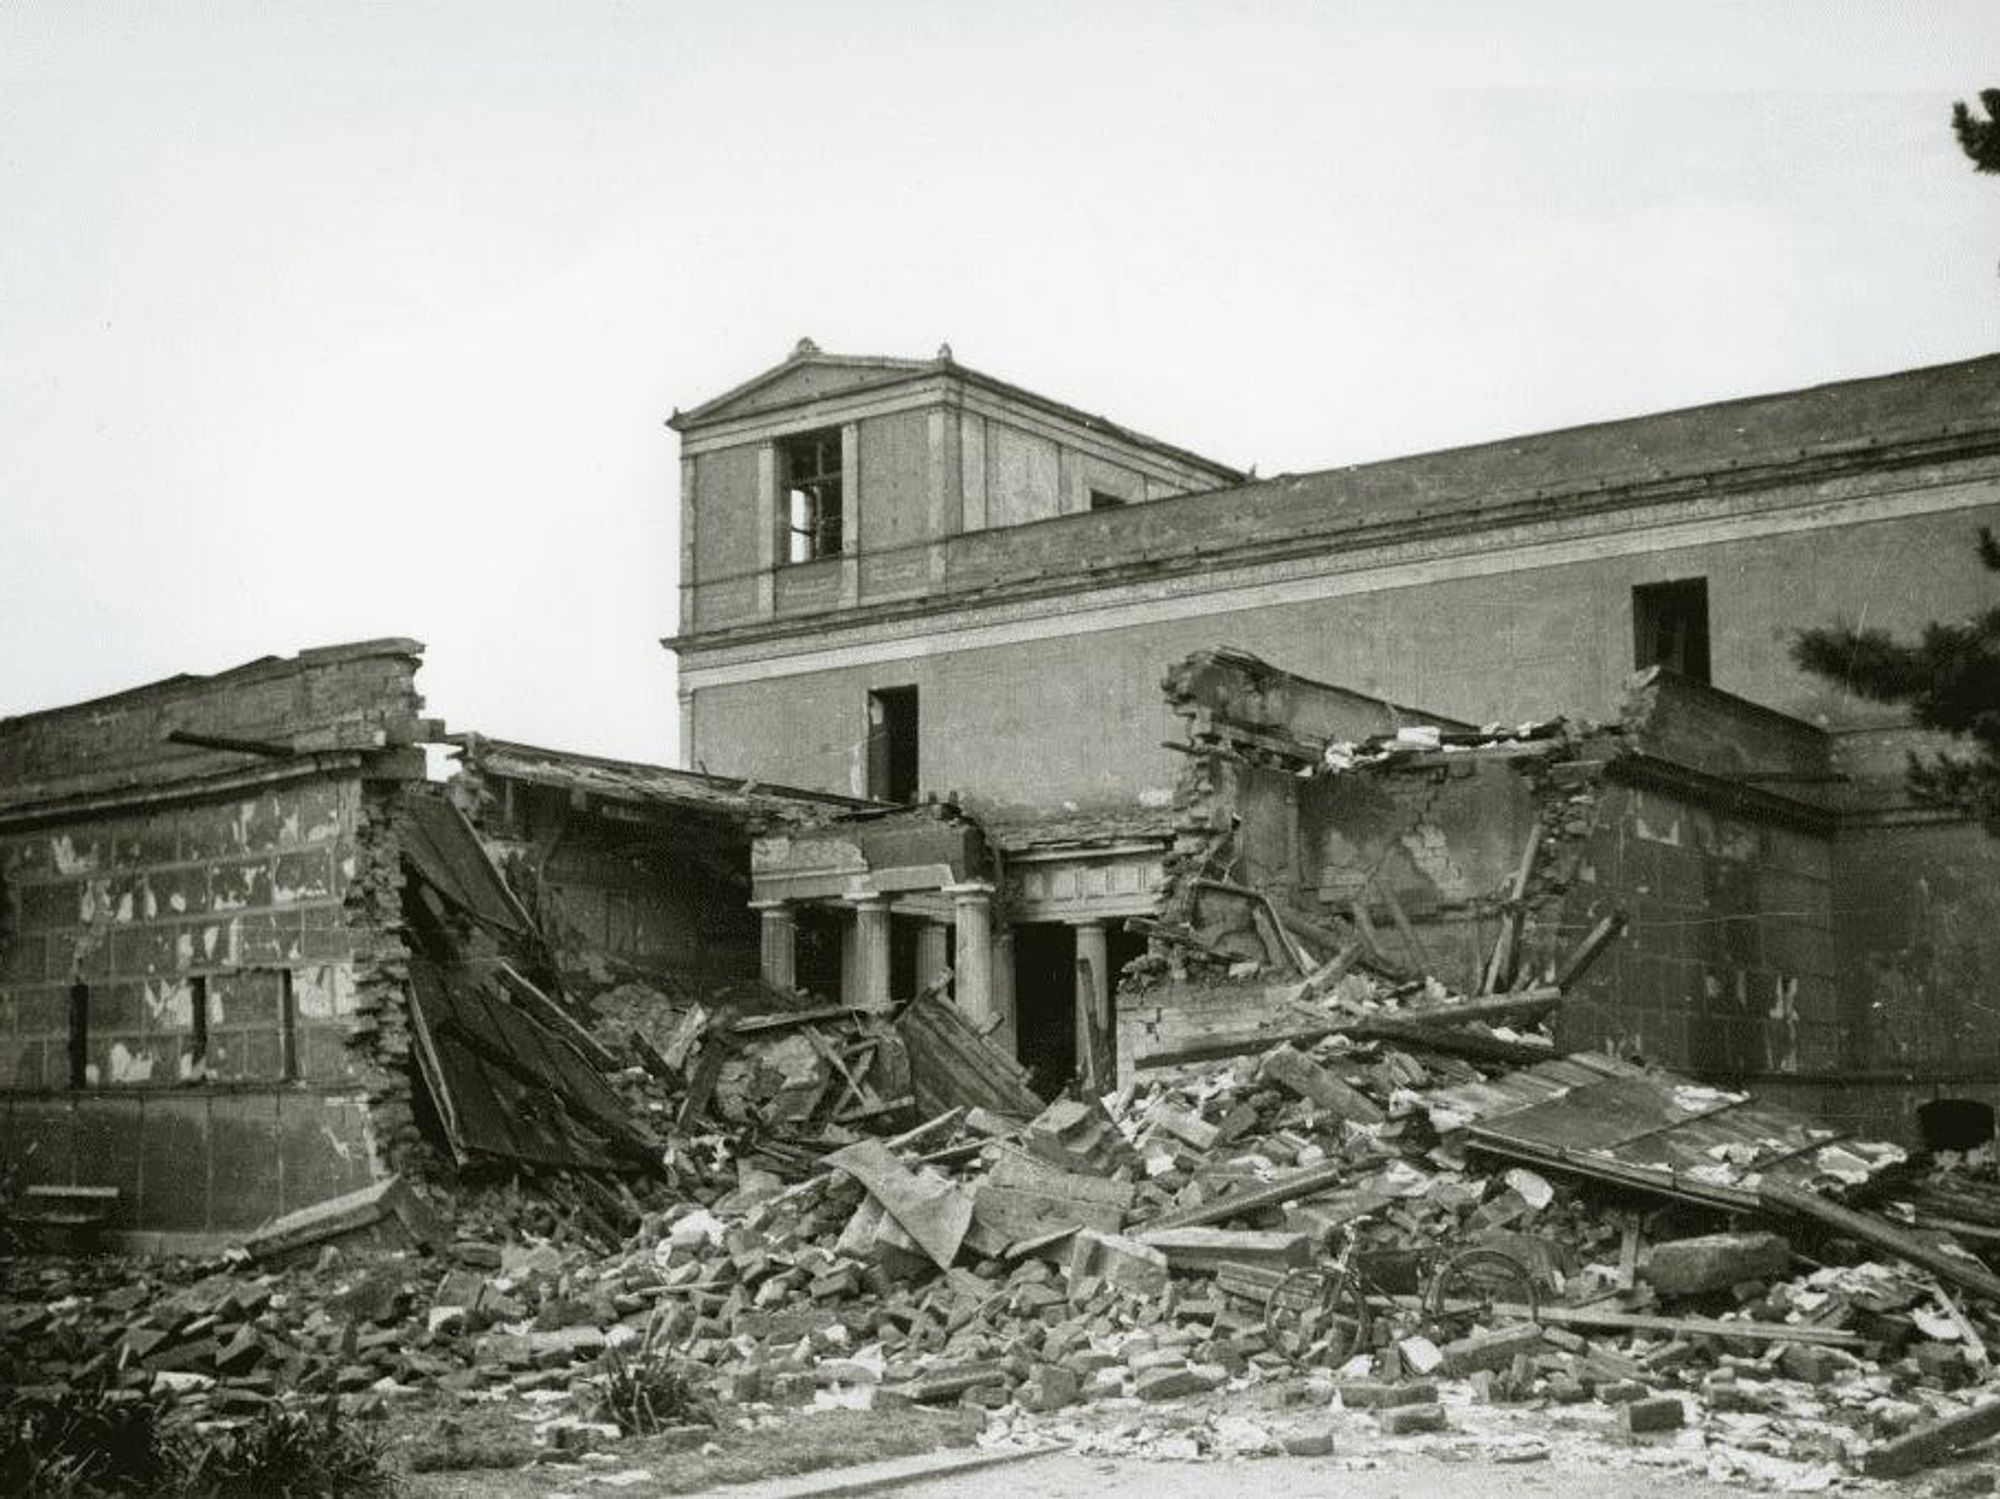 The Bavrian king's replica villa, Pompejanum, was destroyed in World War II.